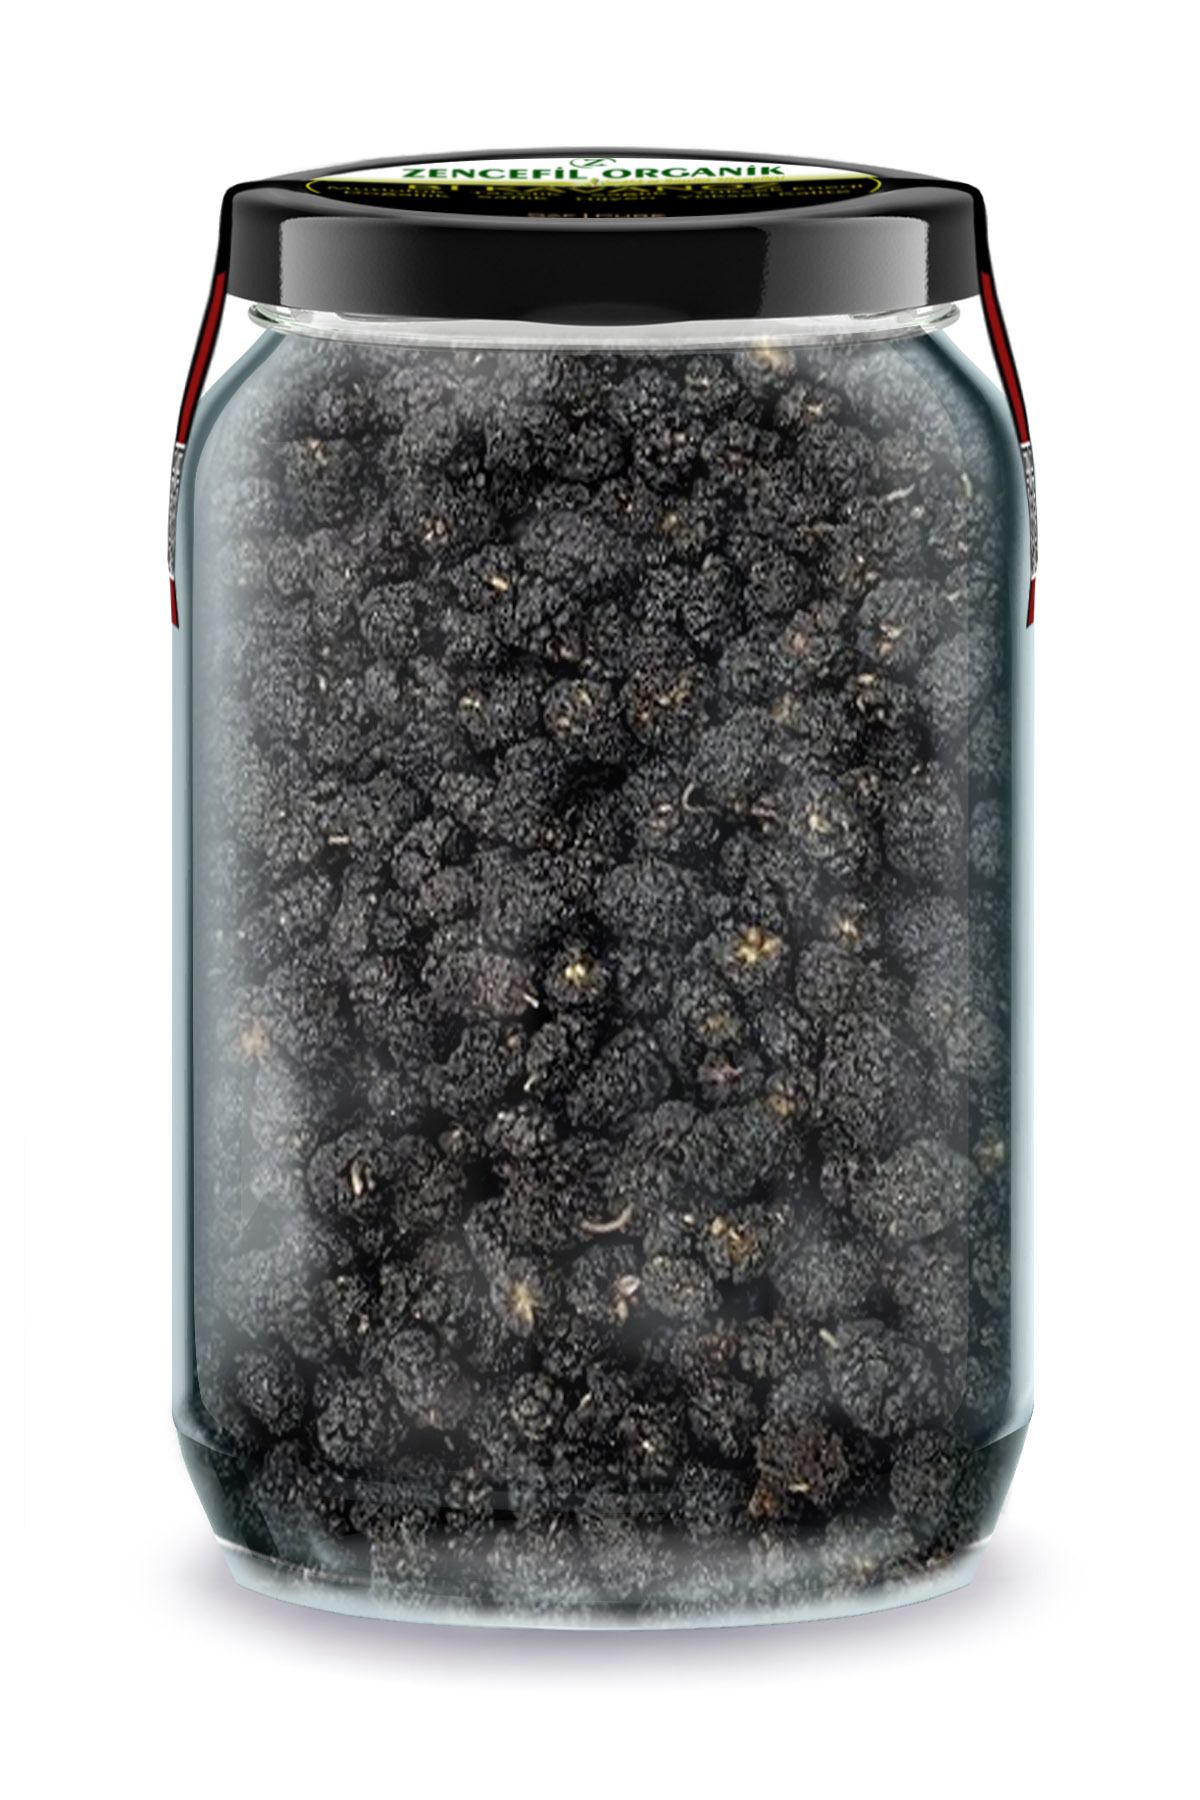 Zencefil Organik Siyah Dut Kurusu Bi Kavanoz 660 cc. Cam Kavanozda Katkısız Kurutulmuş Karadut Dried Black Mulberry